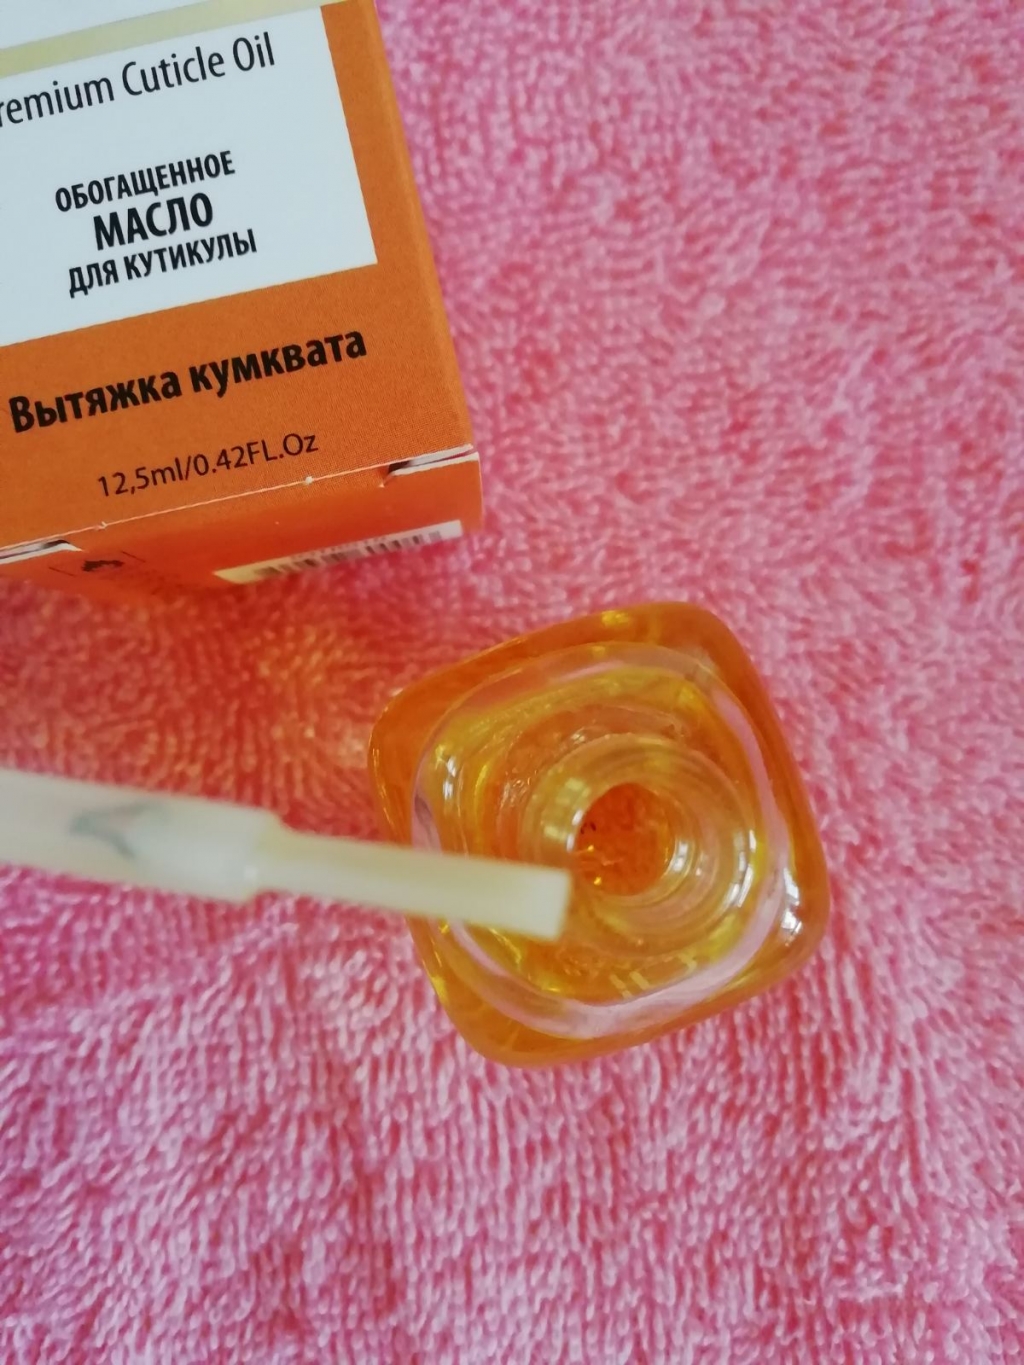 IQ Beauty - Обогащённое масло для кутикулы / Premium Cuticle Oil